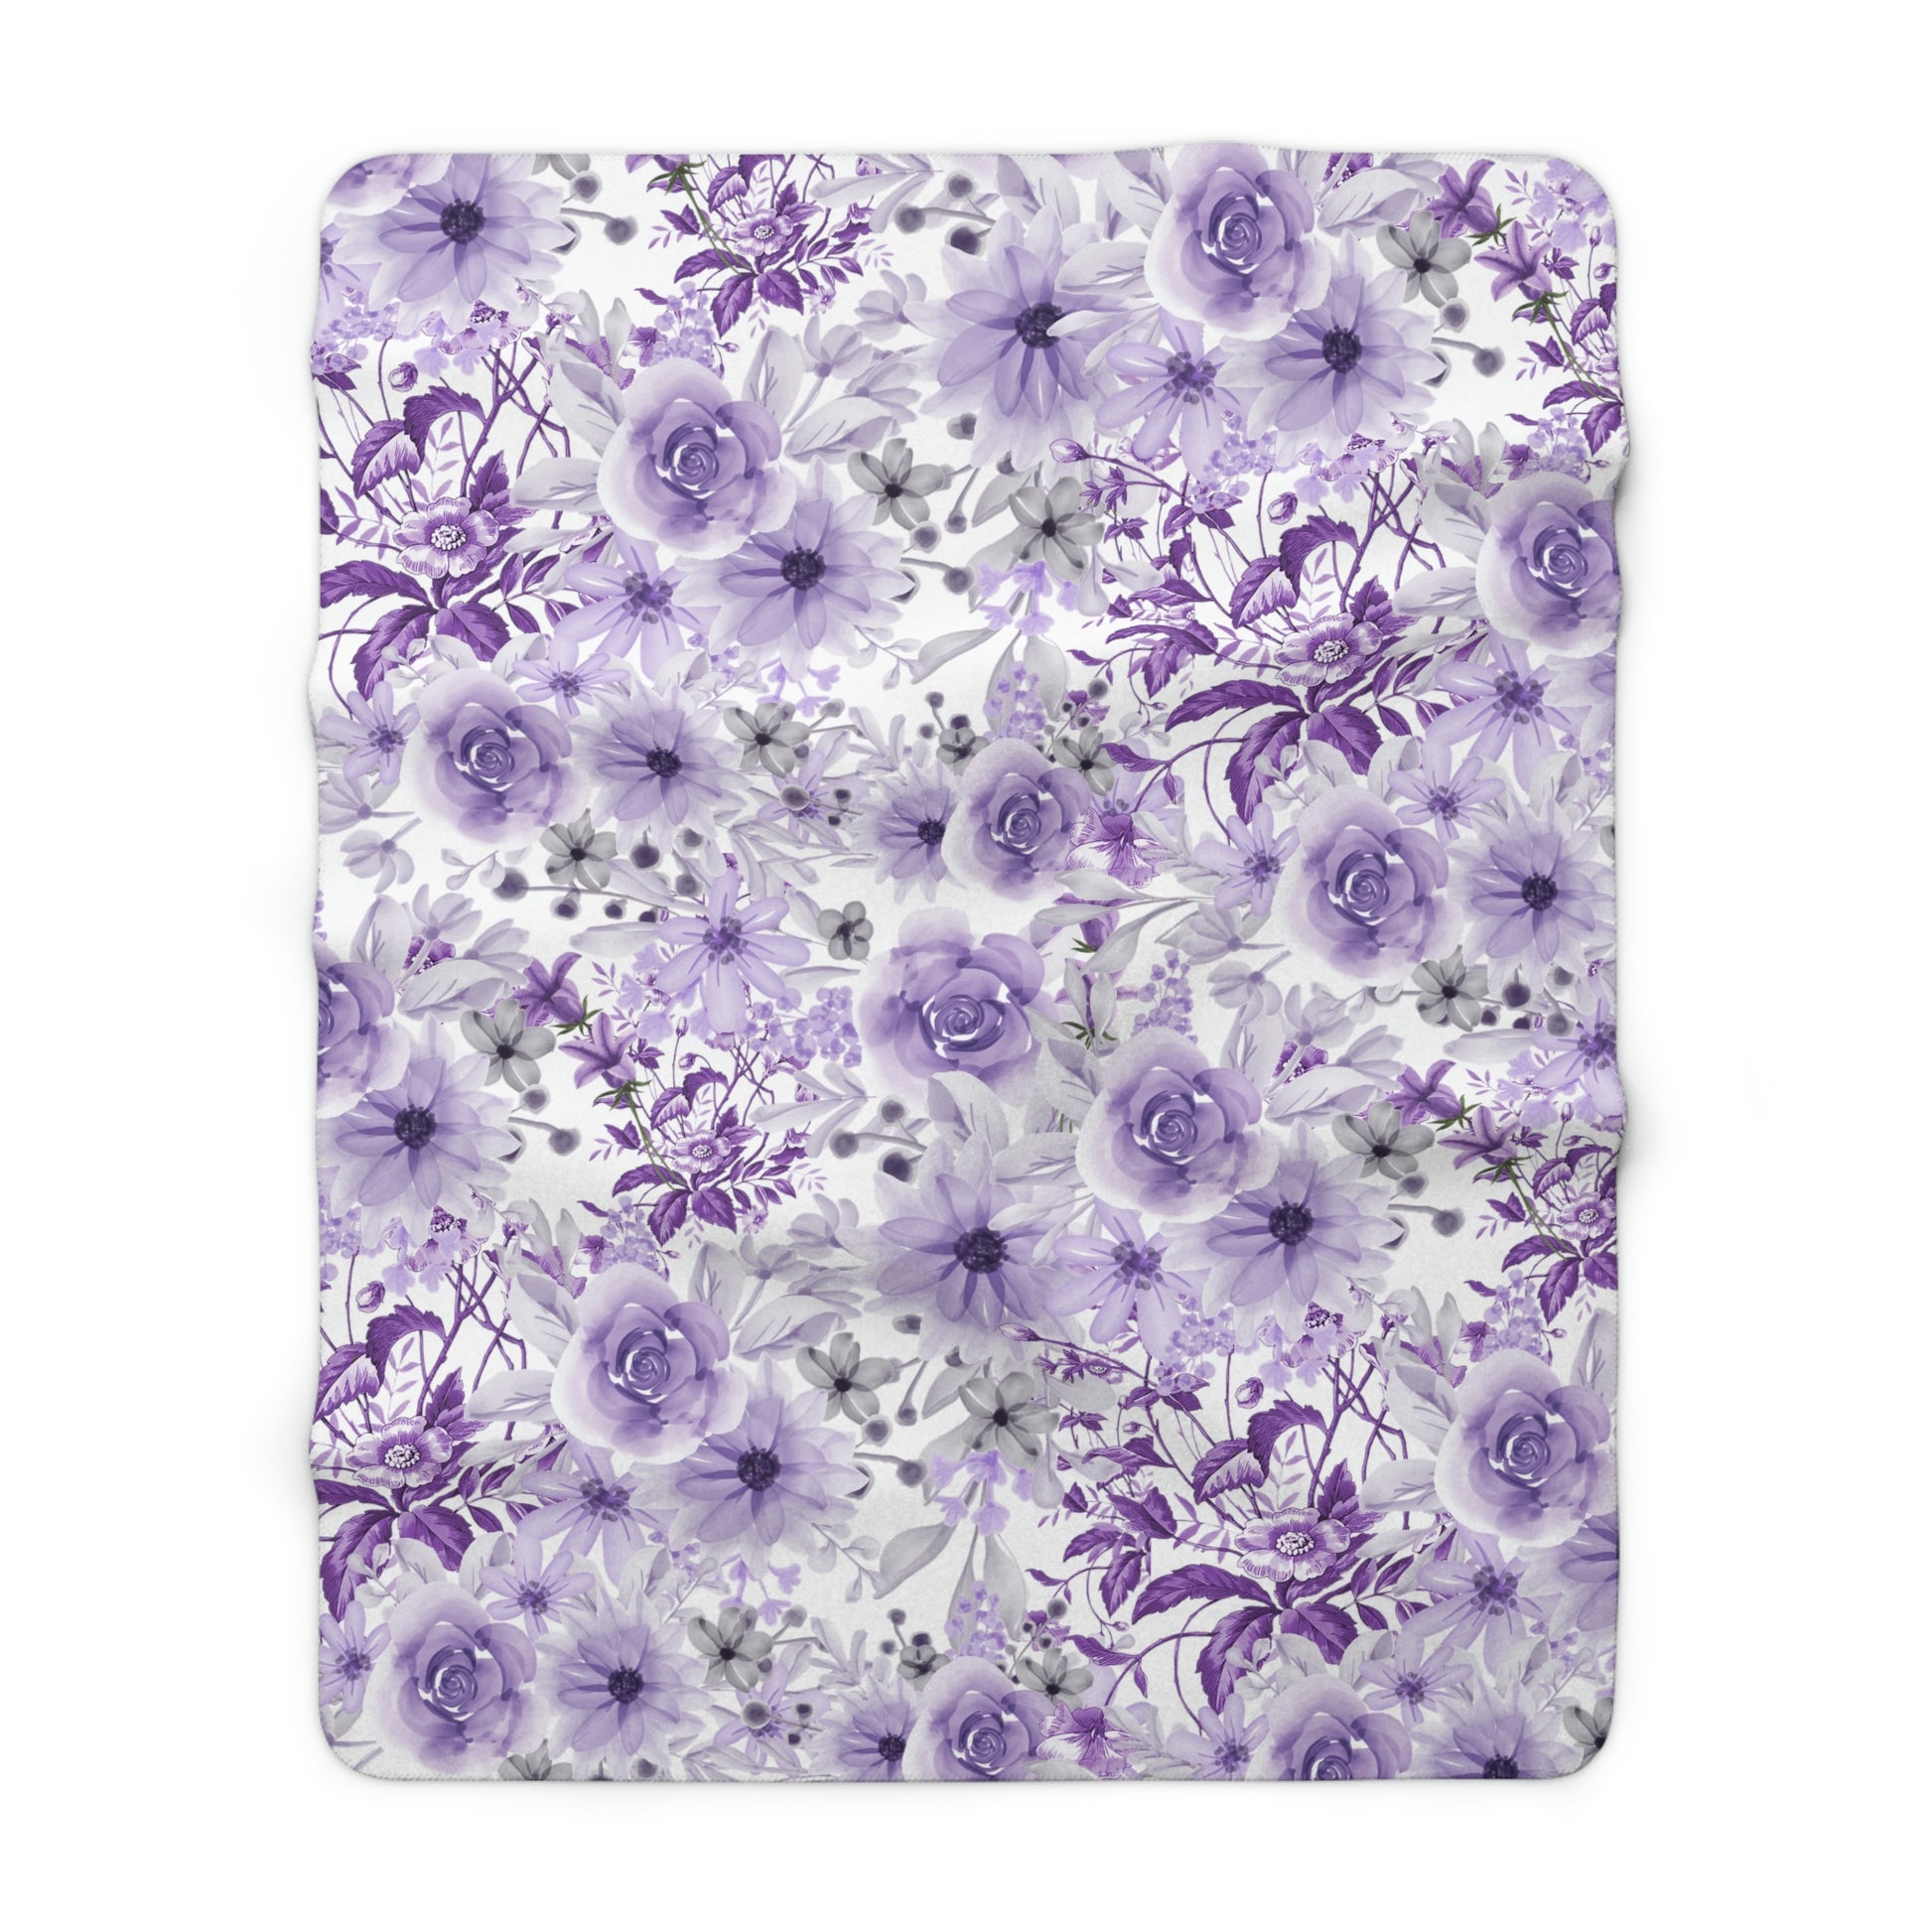 purple flower sherpa blanket for spring or summer living room or bedroom decor